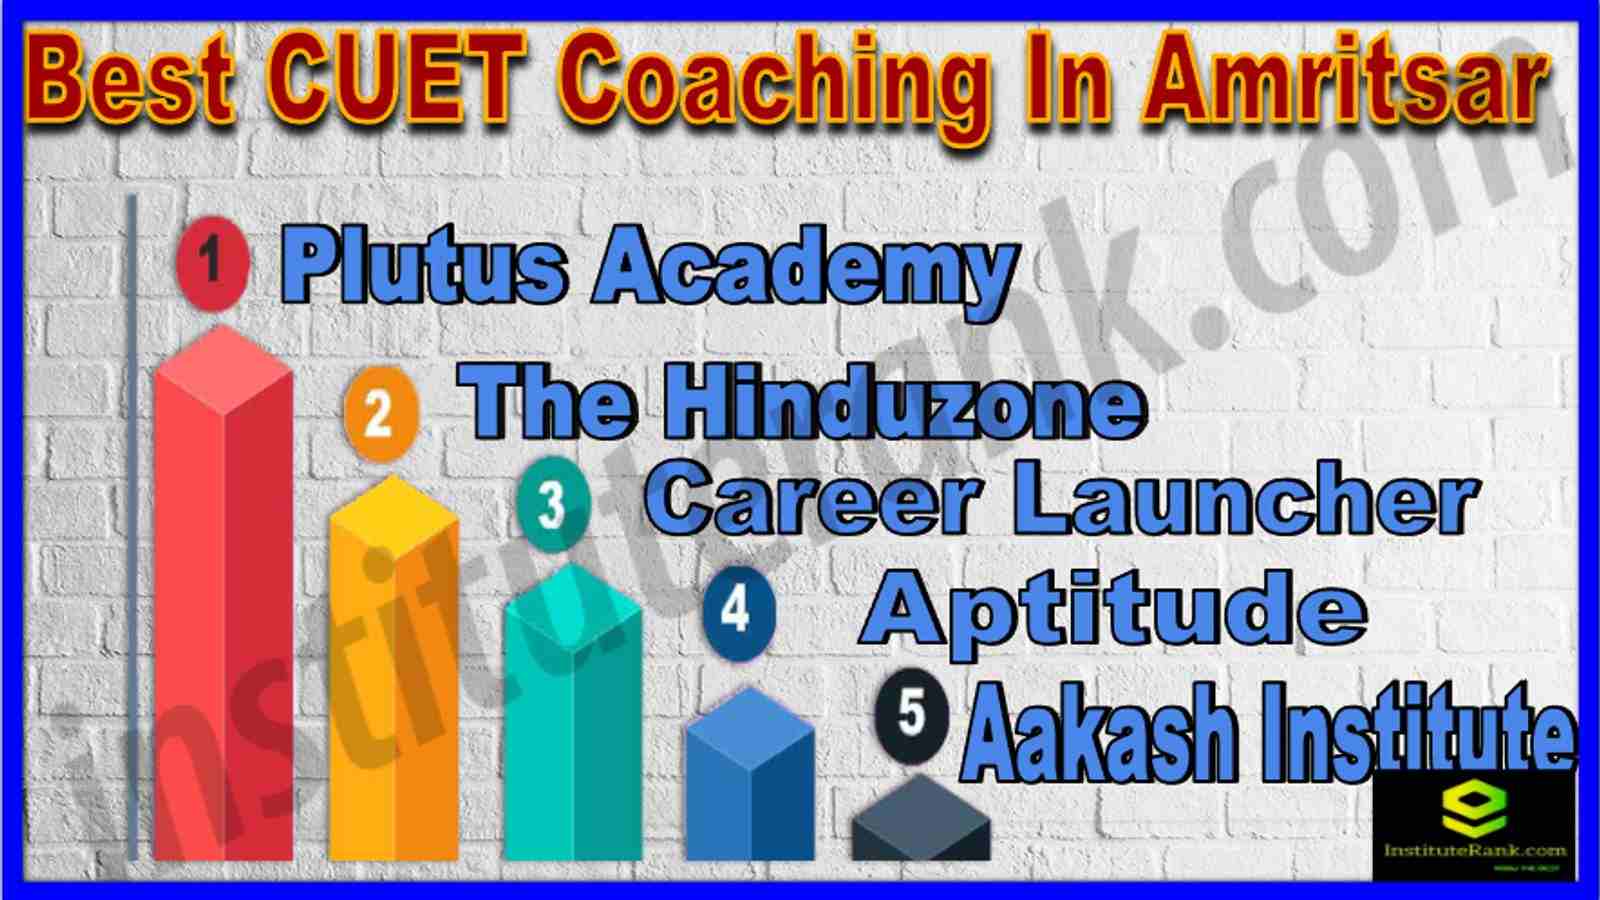 Best CUET Coaching in Amritsar